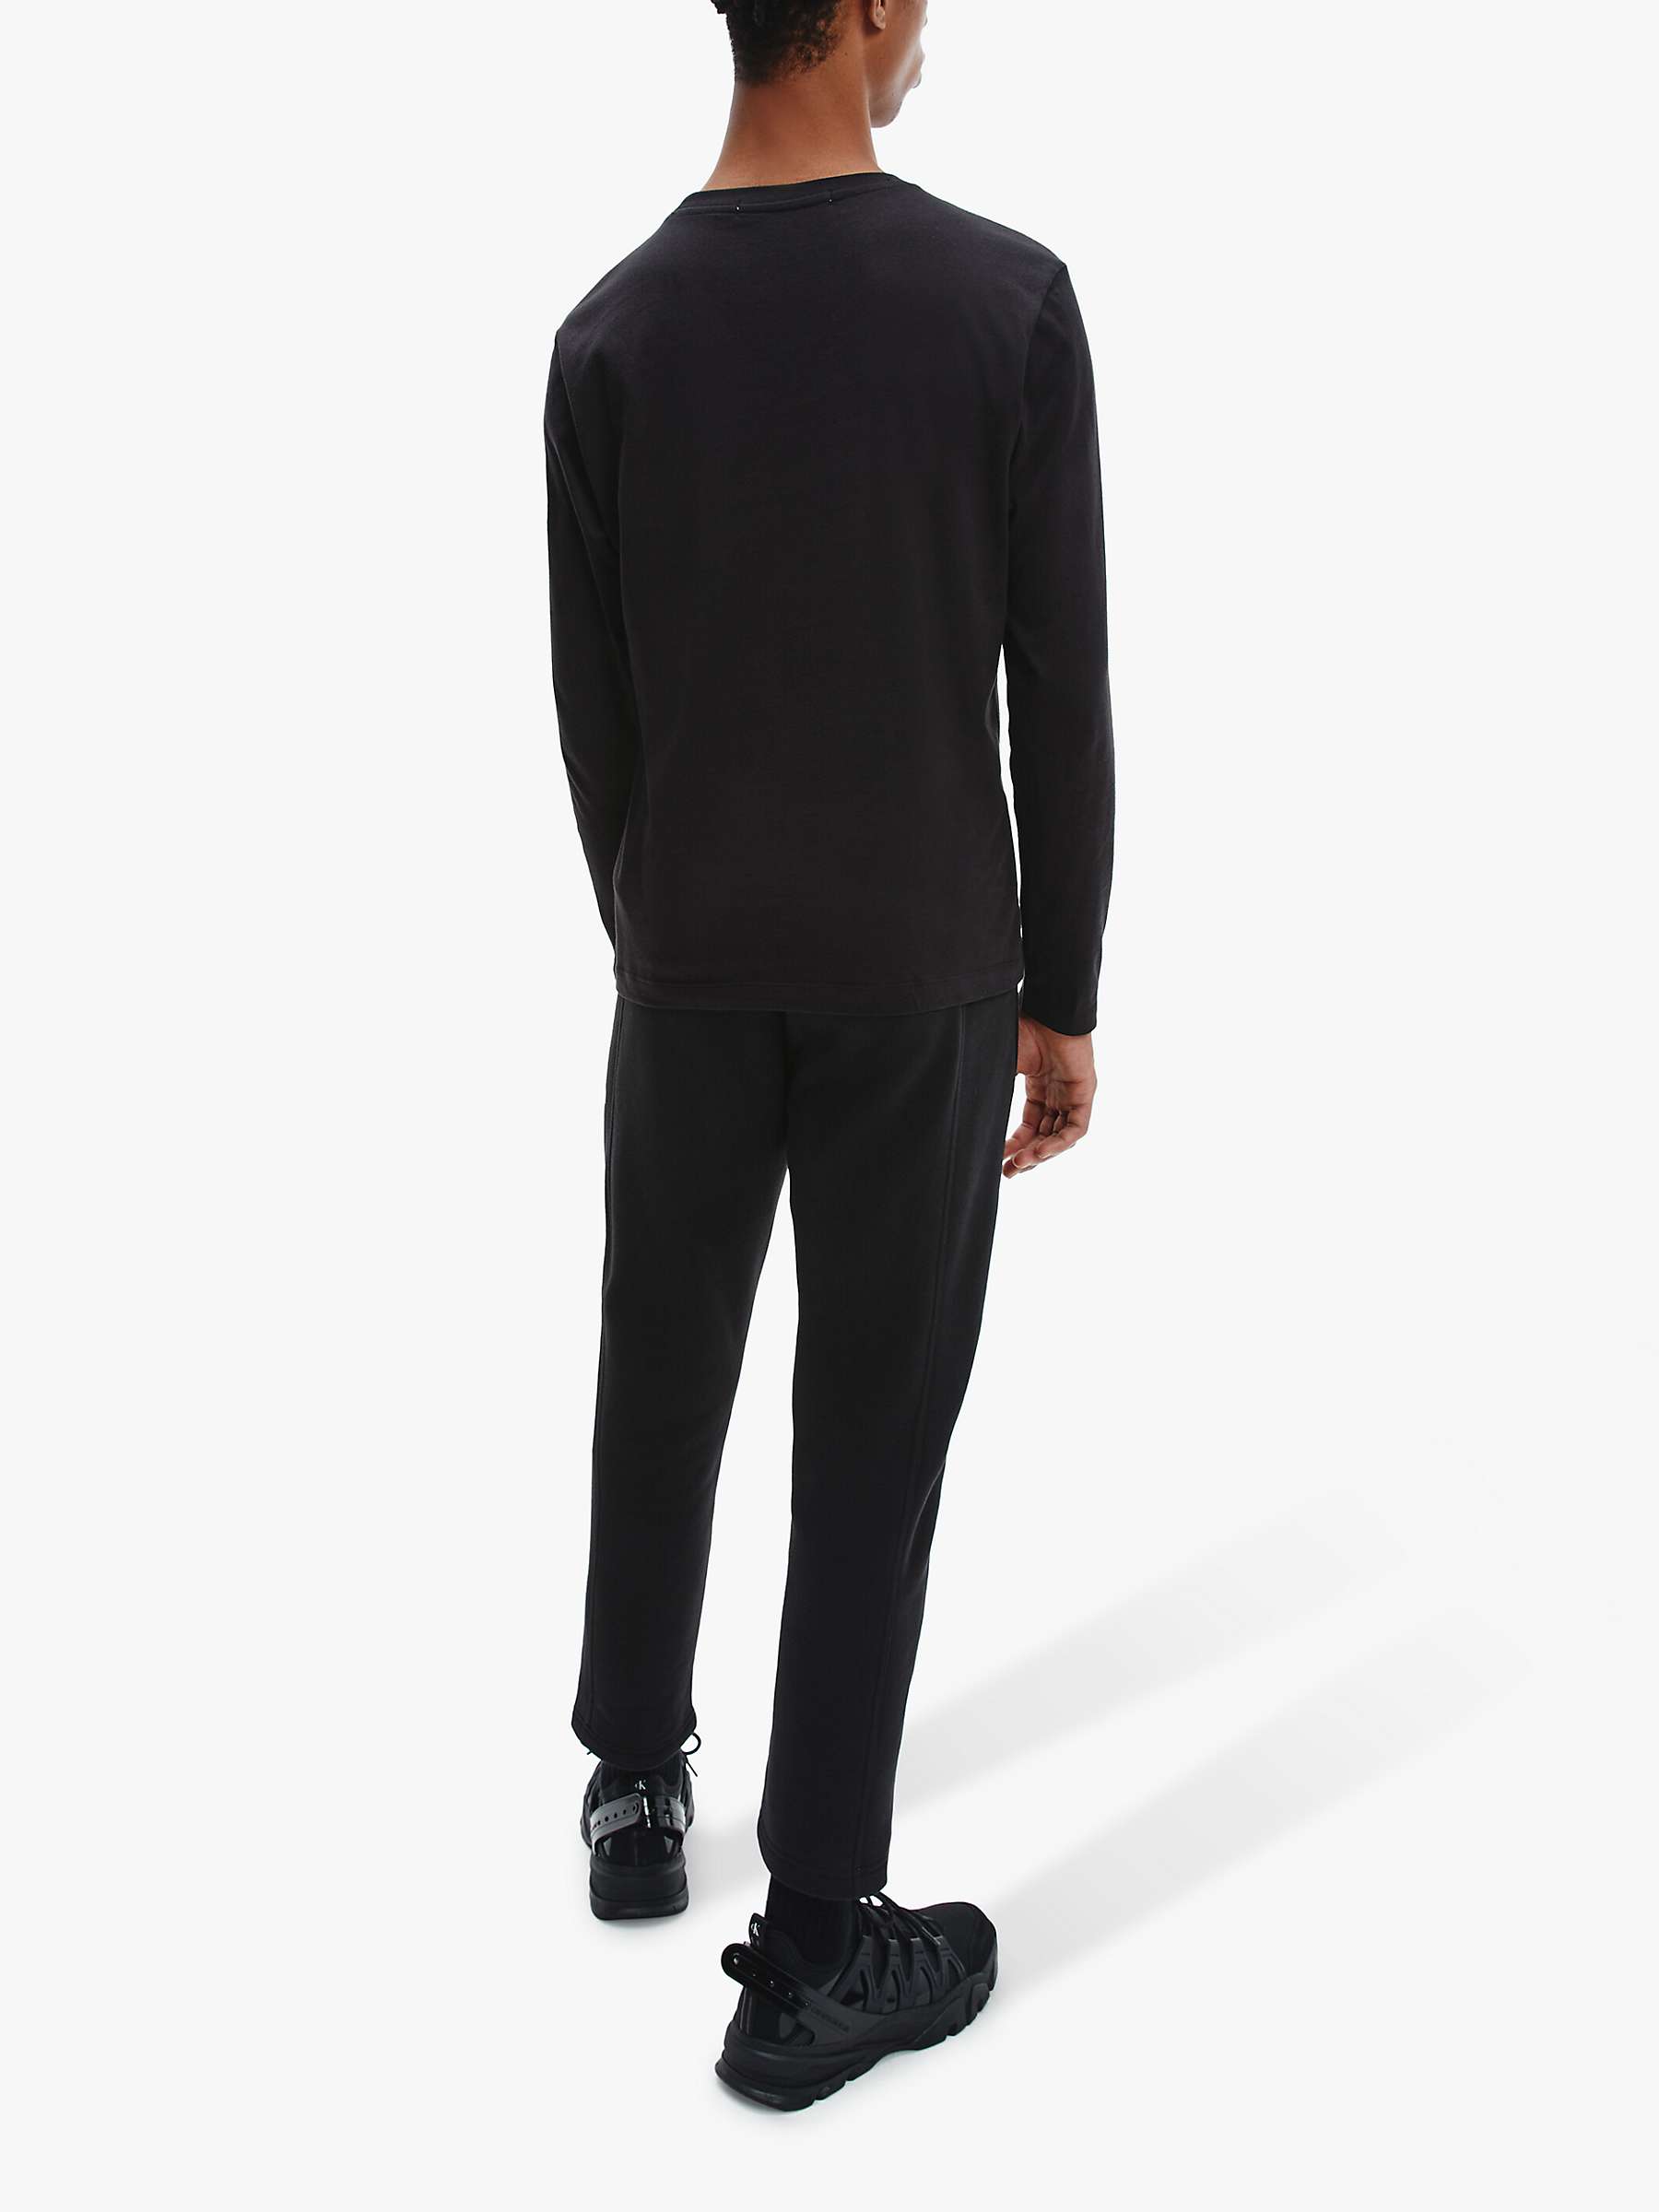 Buy Calvin Klein Jeans Institutional Logo Long Sleeve T-Shirt Online at johnlewis.com